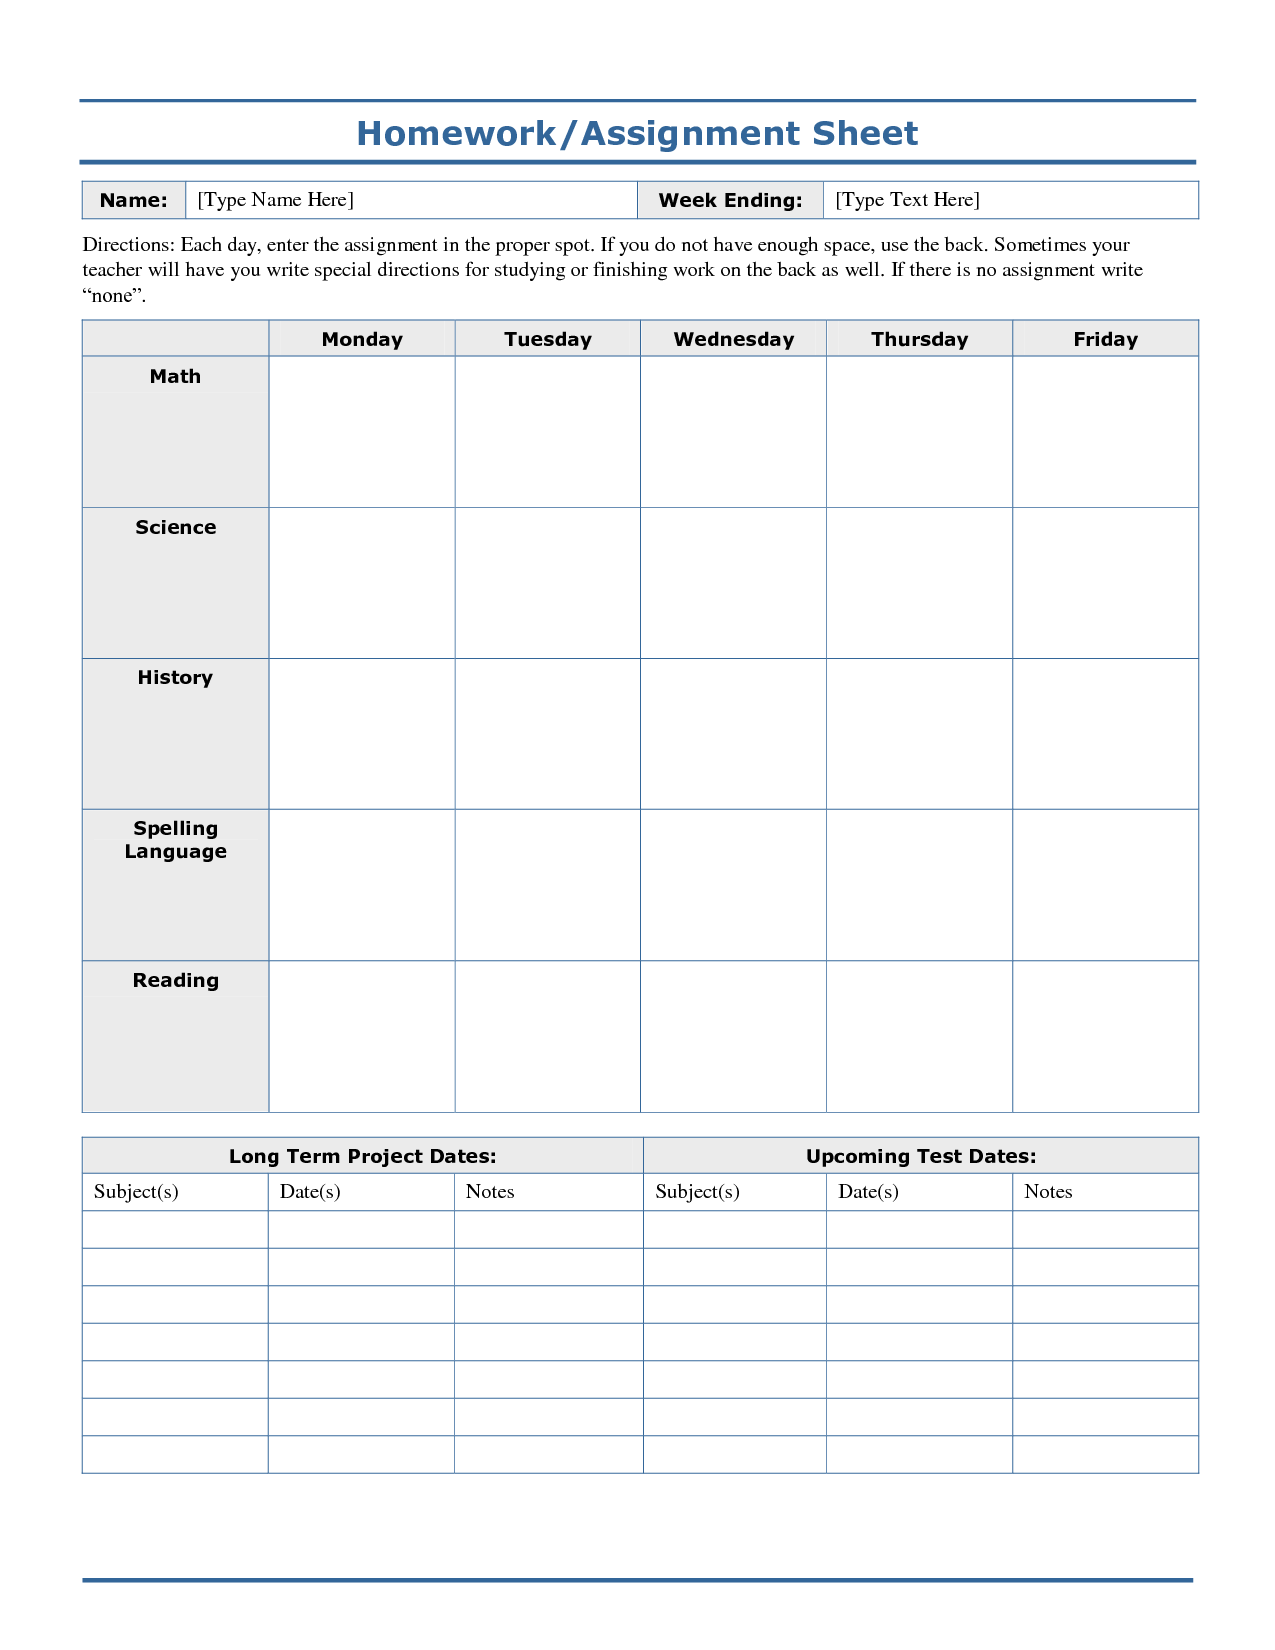 weekly homework assignment sheet printable